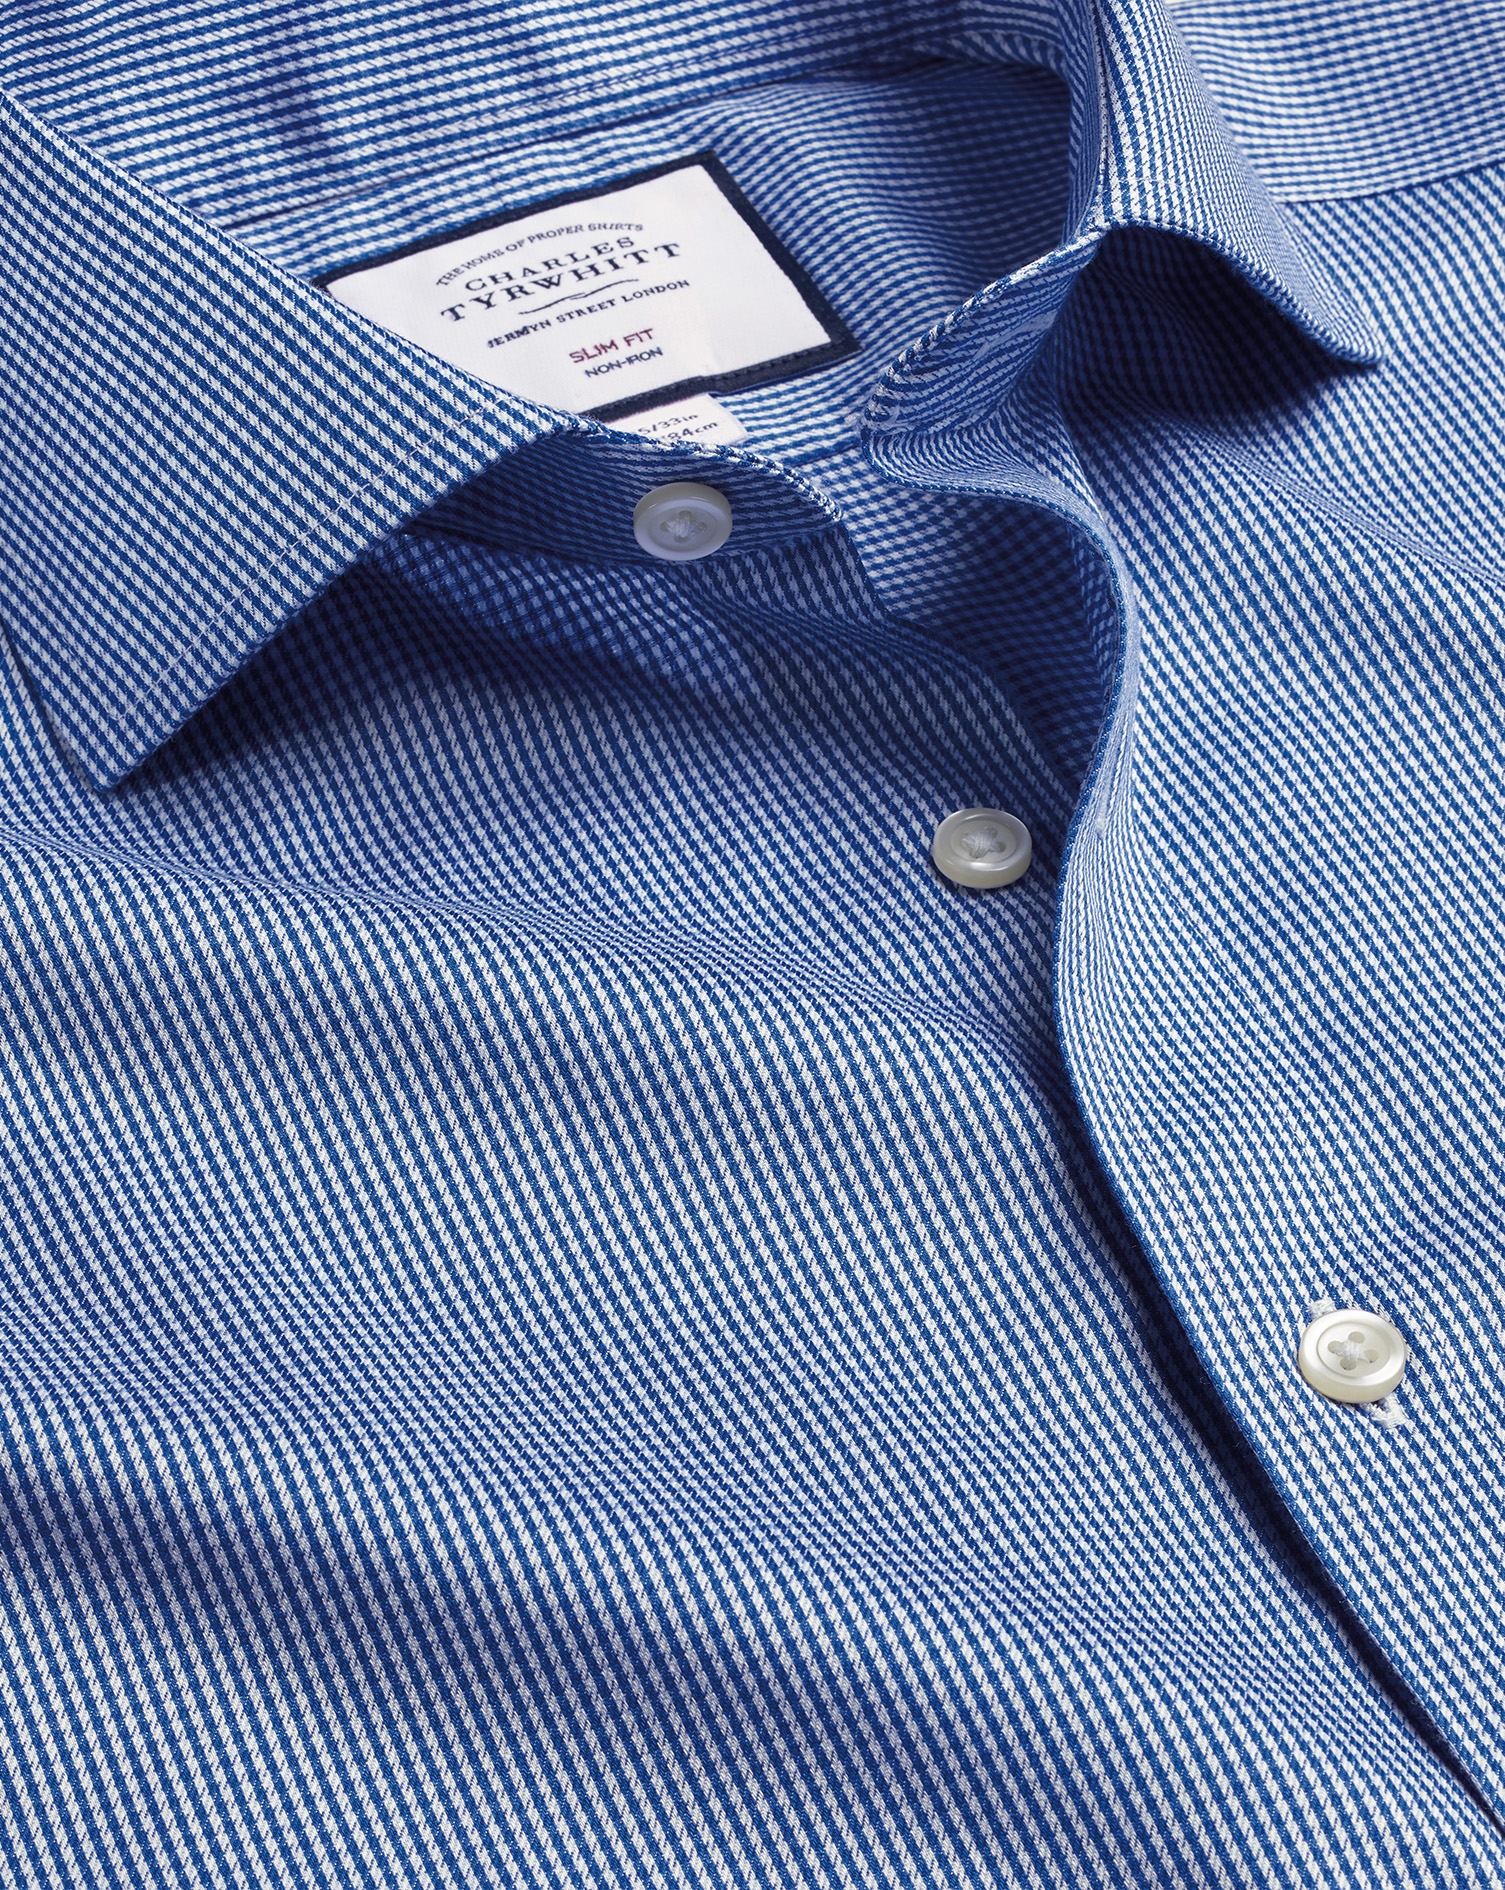 Men's Charles Tyrwhitt Cutaway Collar Non-Iron Puppytooth Dress Shirt - Royal Blue French Cuff Size 